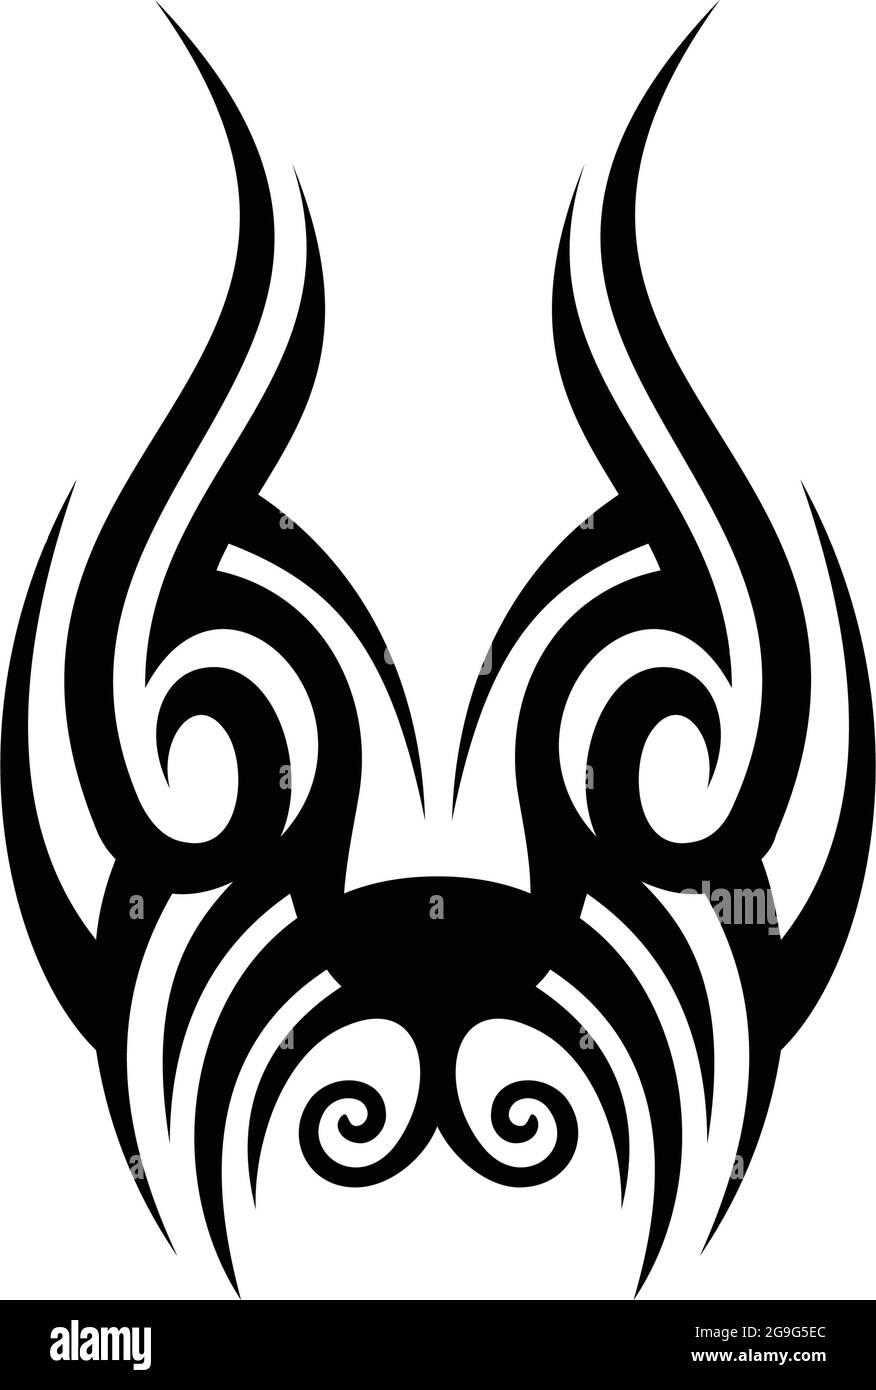 dog tribal tattoo logo icon flat concept vector design Stock Vector